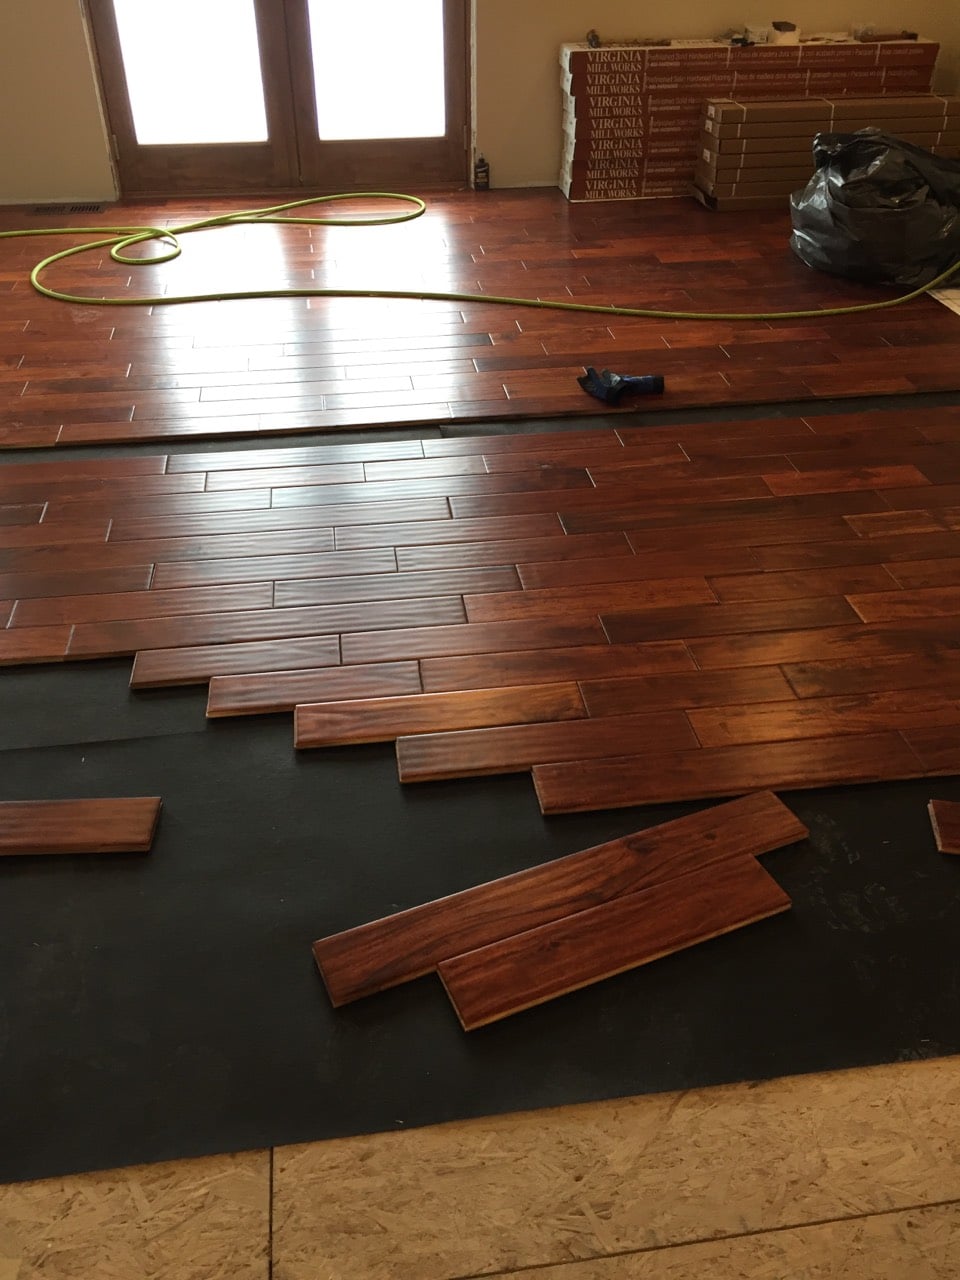 hardwood floor installation